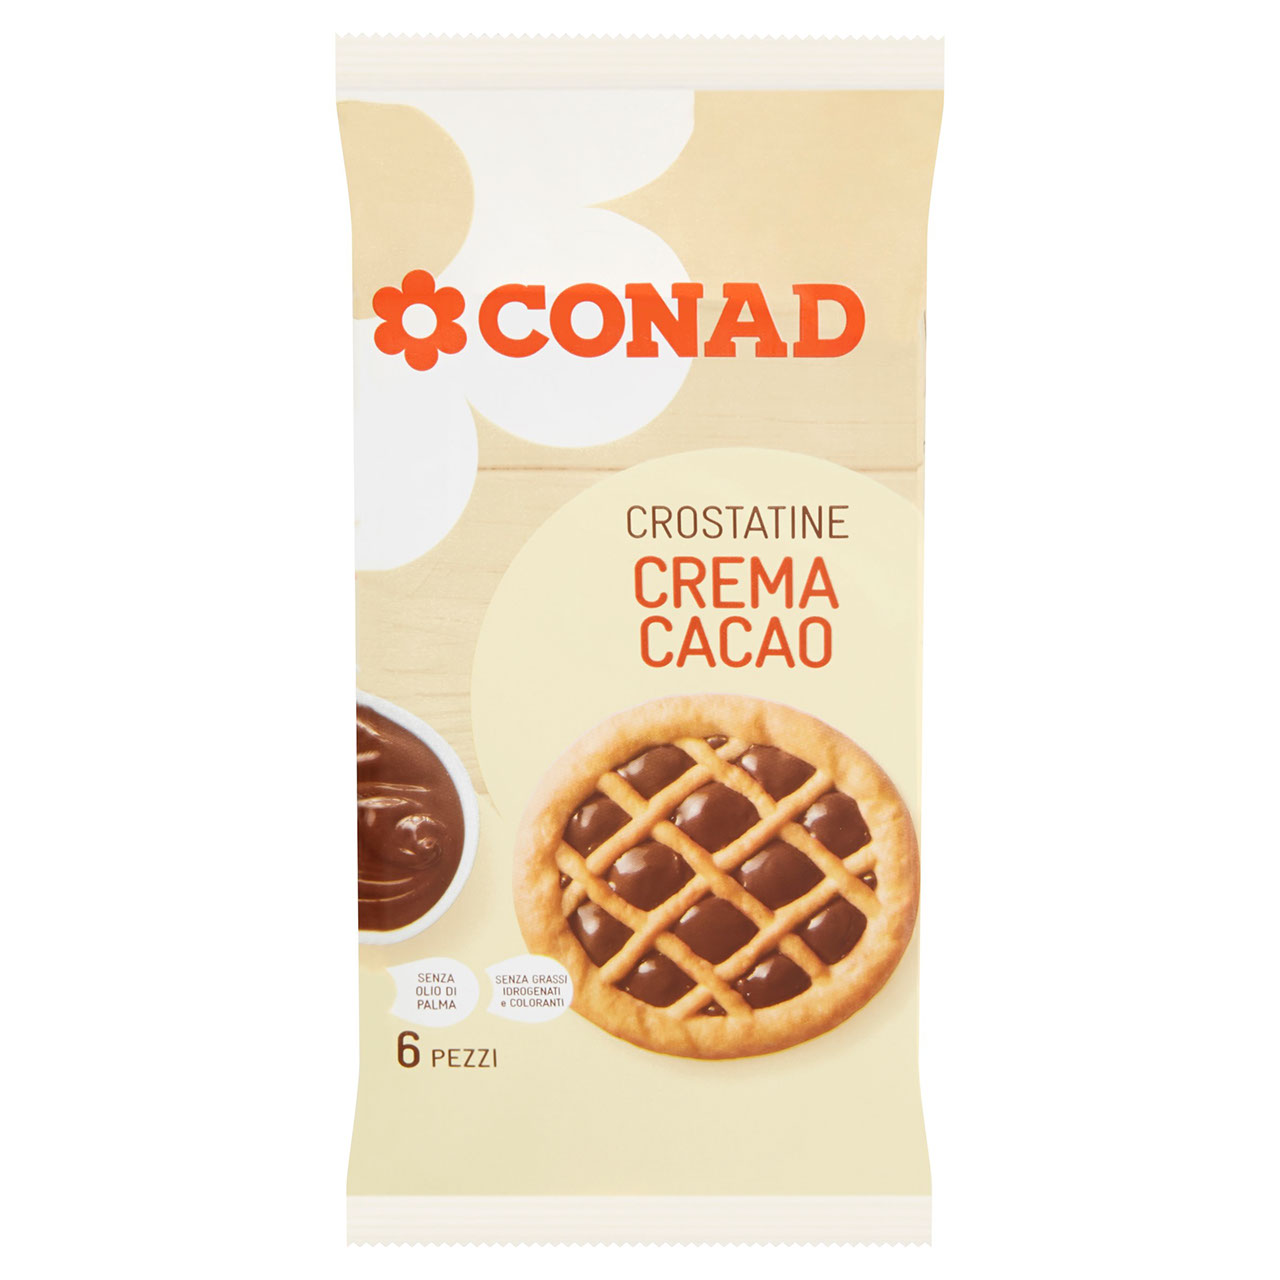 Crostatine al Cacao Conad in vendita online